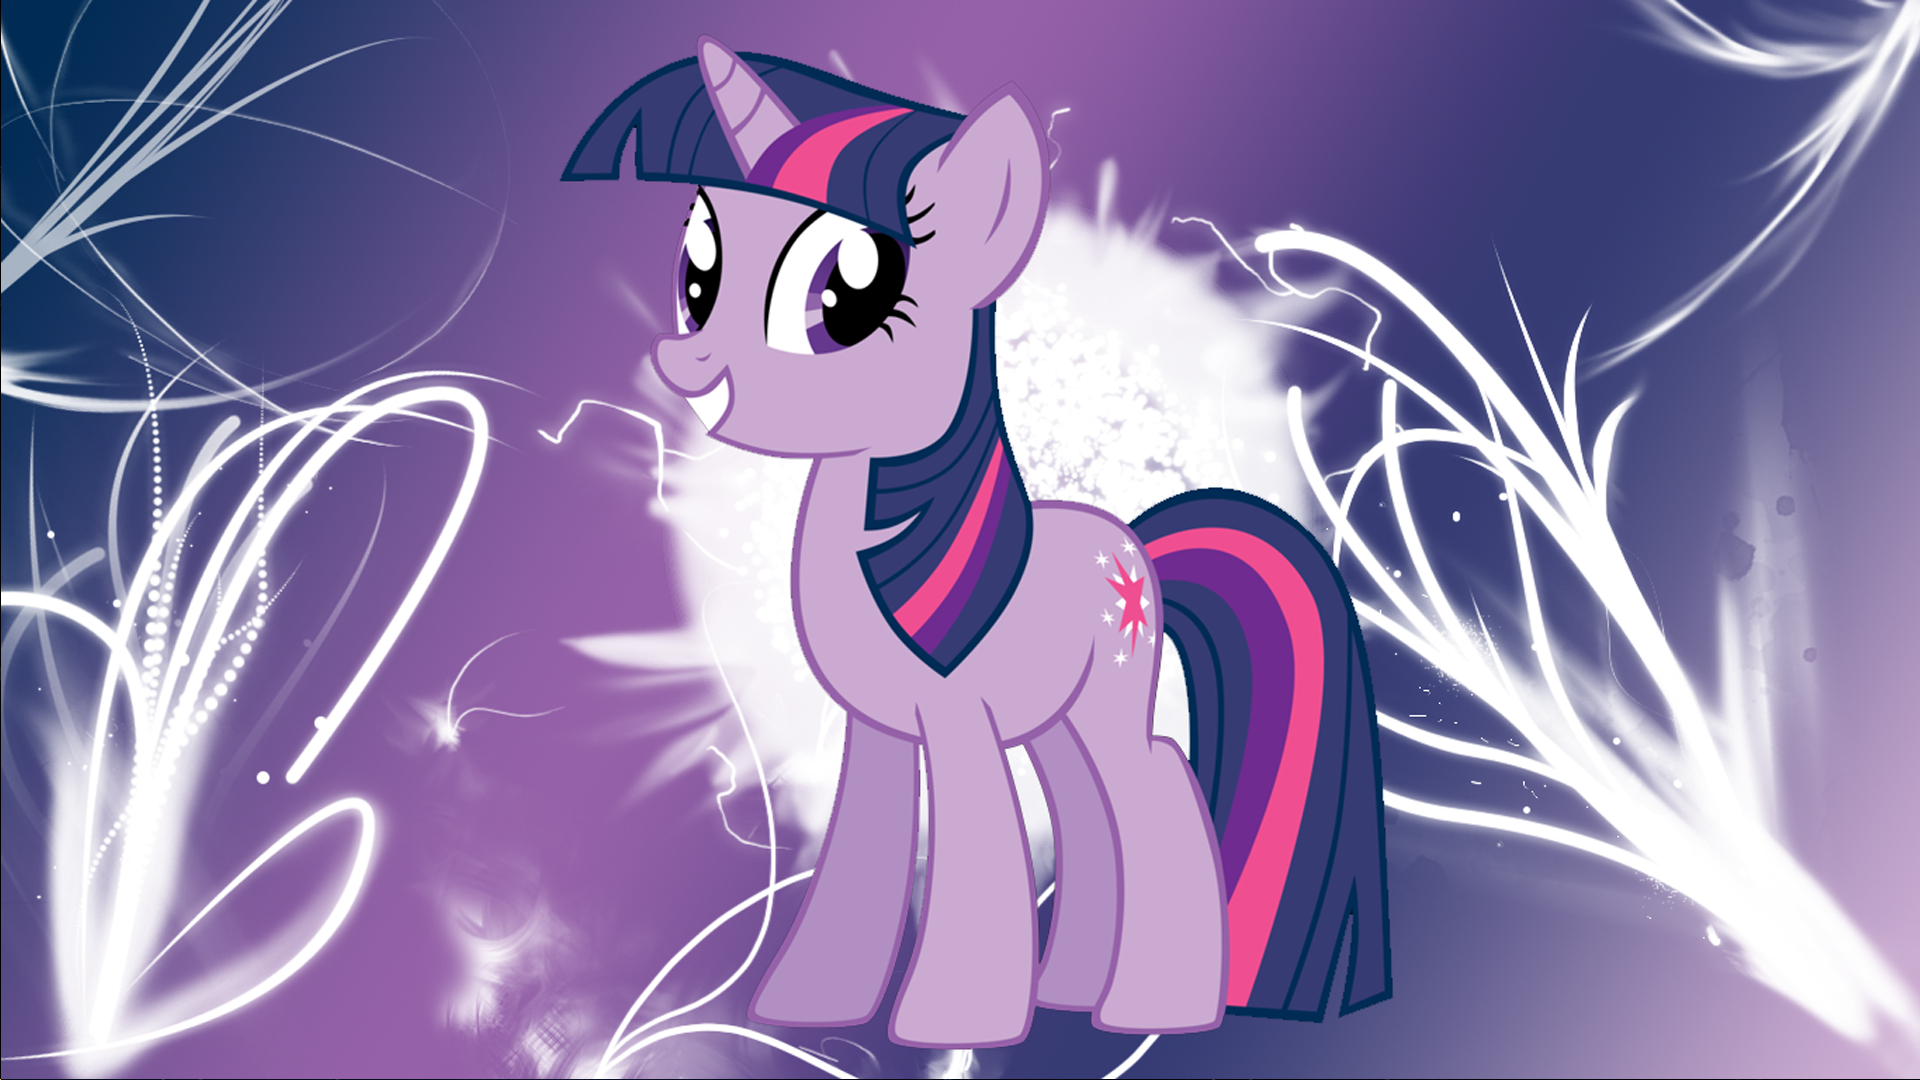 1920x1080 My Little Pony Friendship is Magic Wallpaper: Twilight Sparkle Wallpaper | My little pony friendship, Sparkle wallpaper, Twilight sparkle